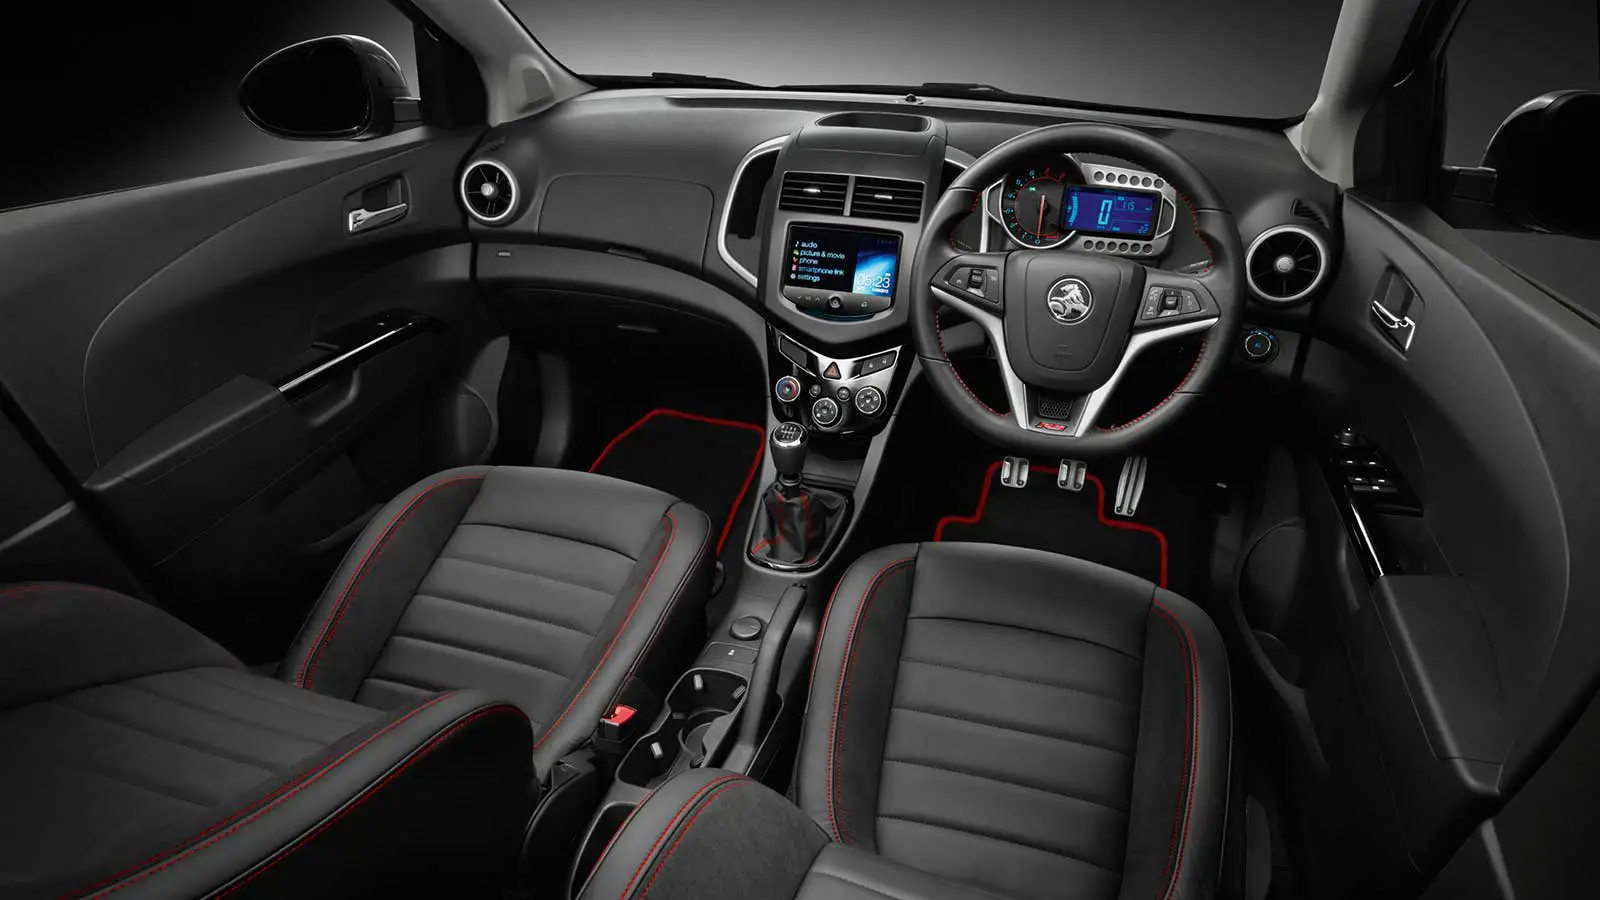 Holden Barina CDX Sedan Interior front view